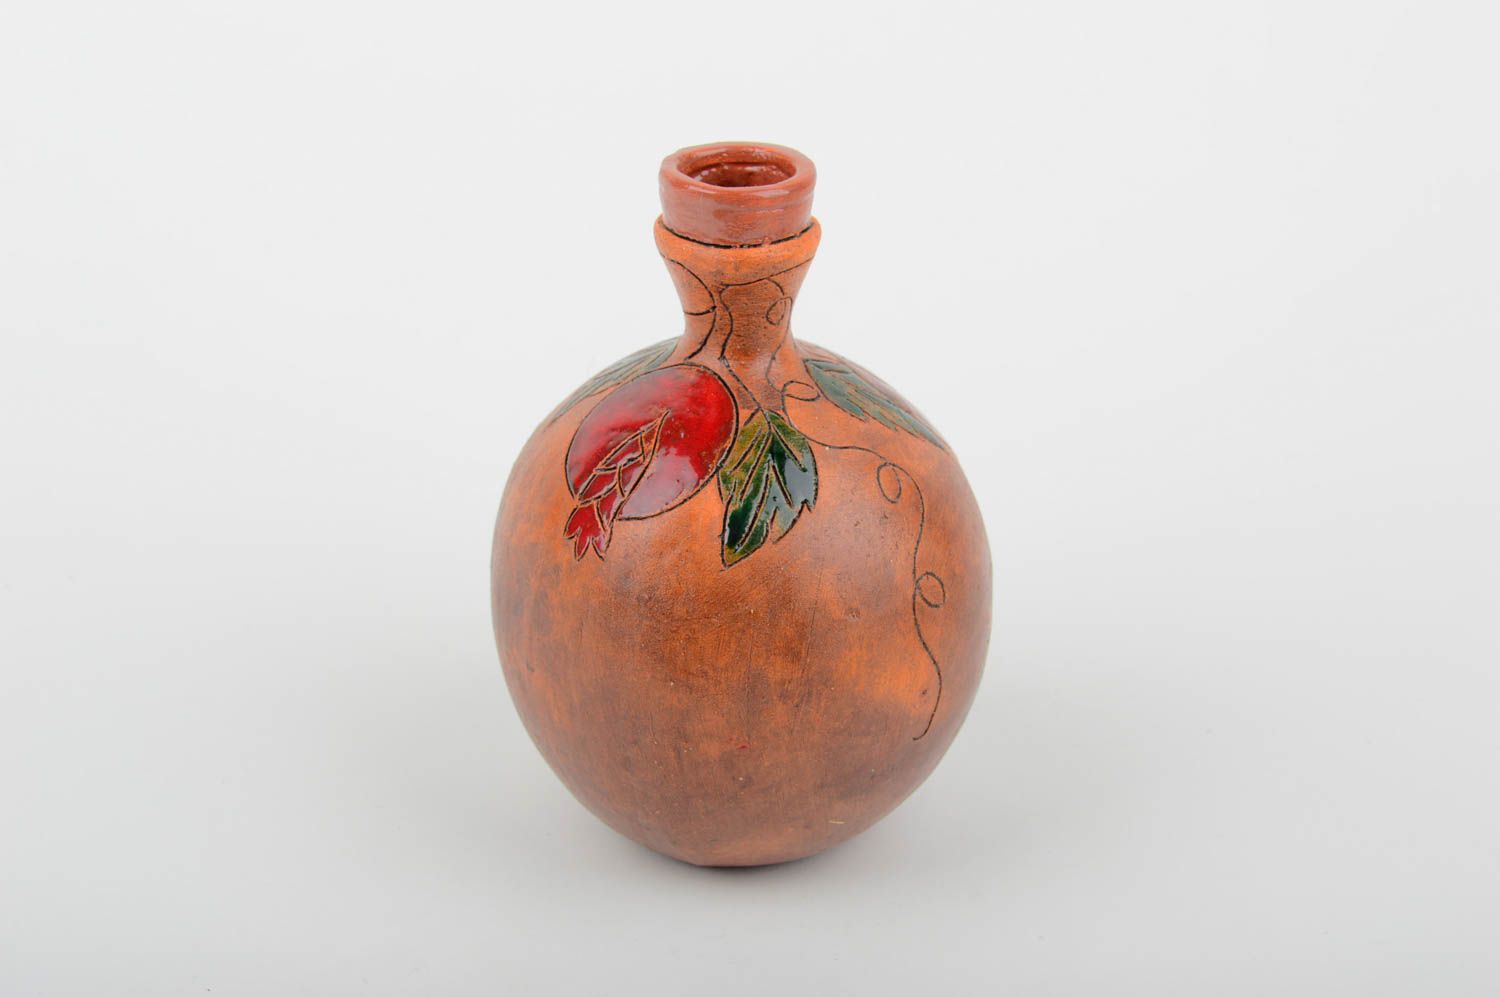 15 oz ceramic wine pitcher in ball shape 0,67 lb photo 5